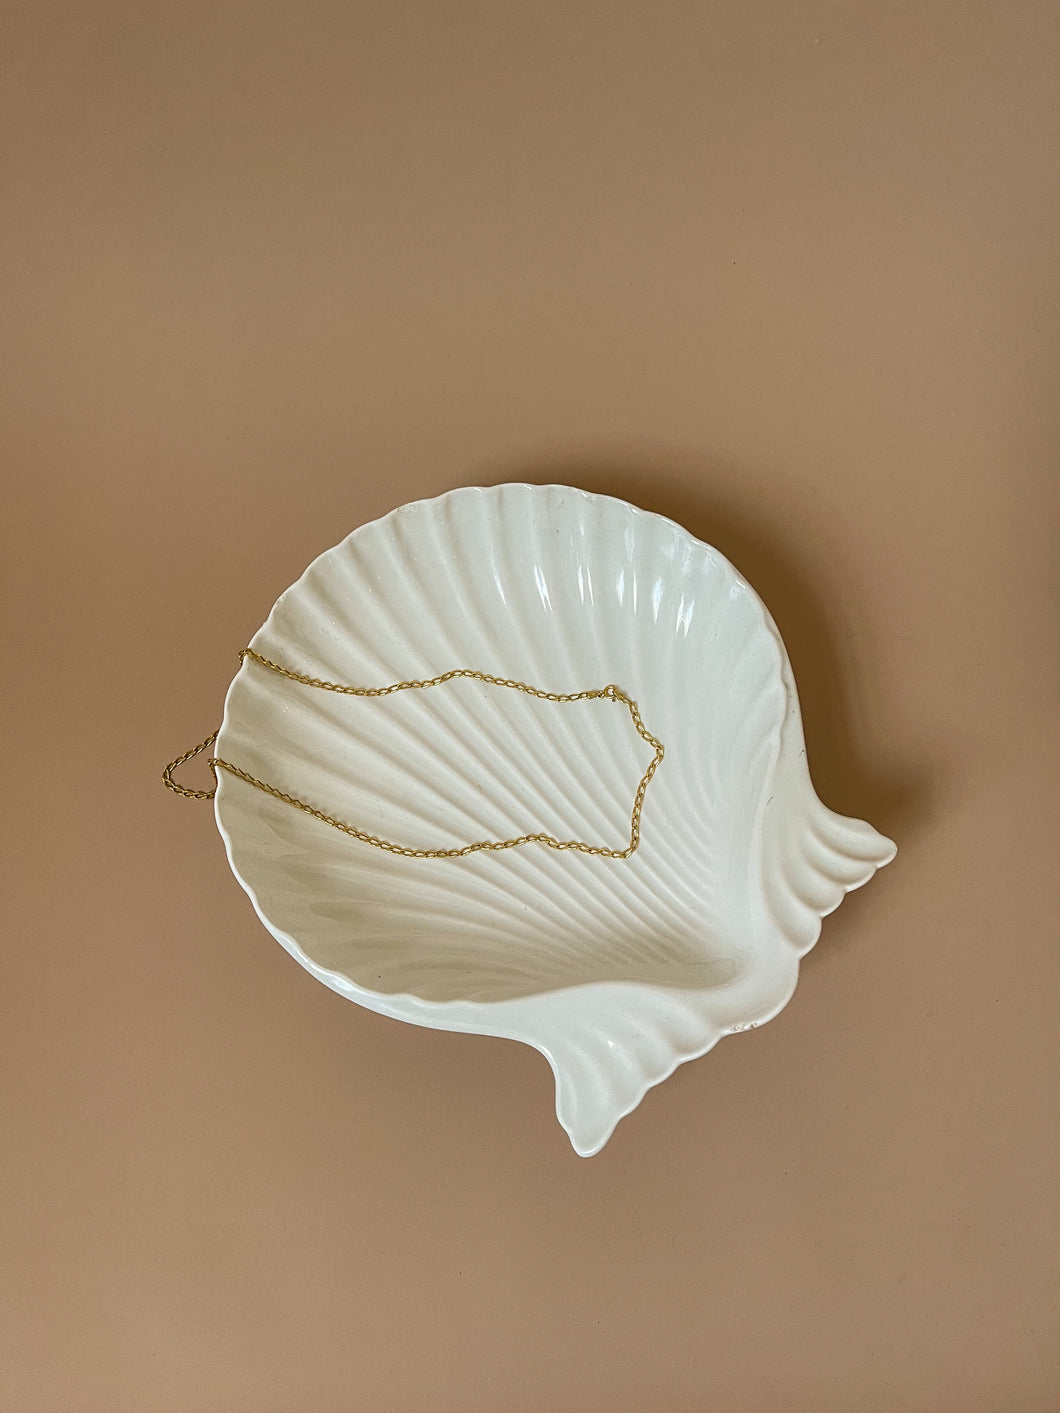 1980s Ceramic White Seashell Dish